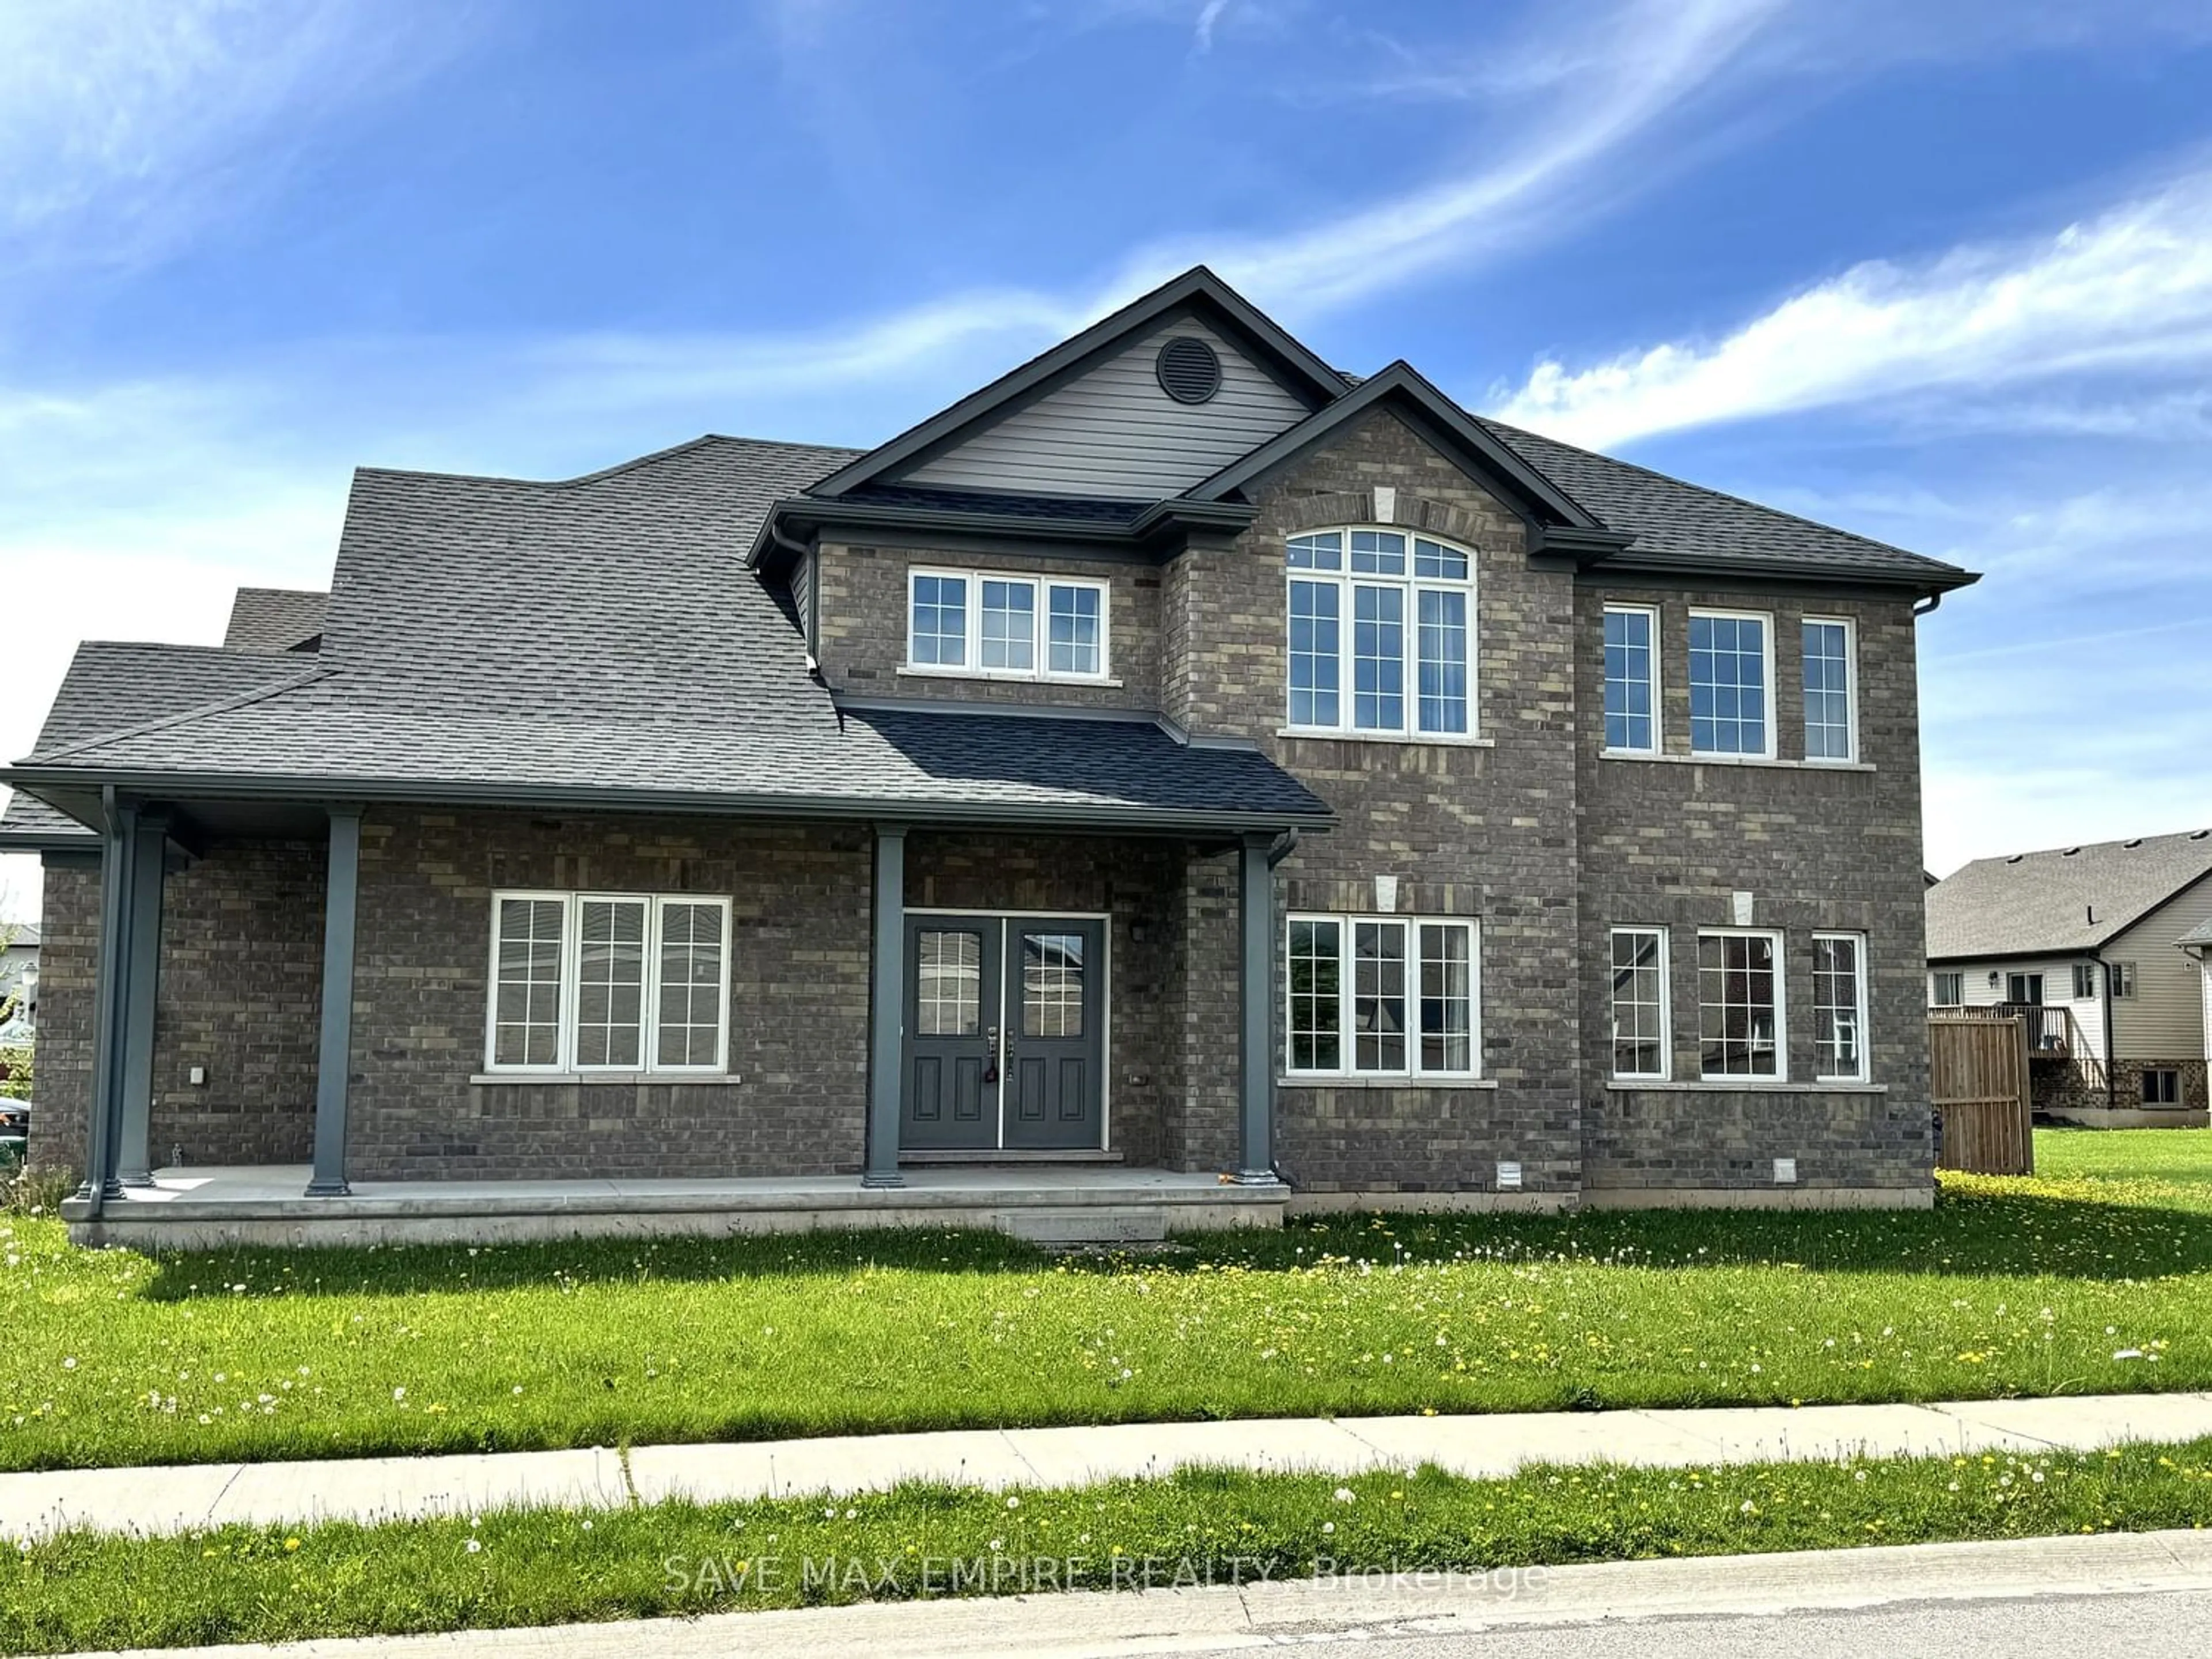 Home with brick exterior material for 6313 Dores Dr, Niagara Falls Ontario L2G 0H1